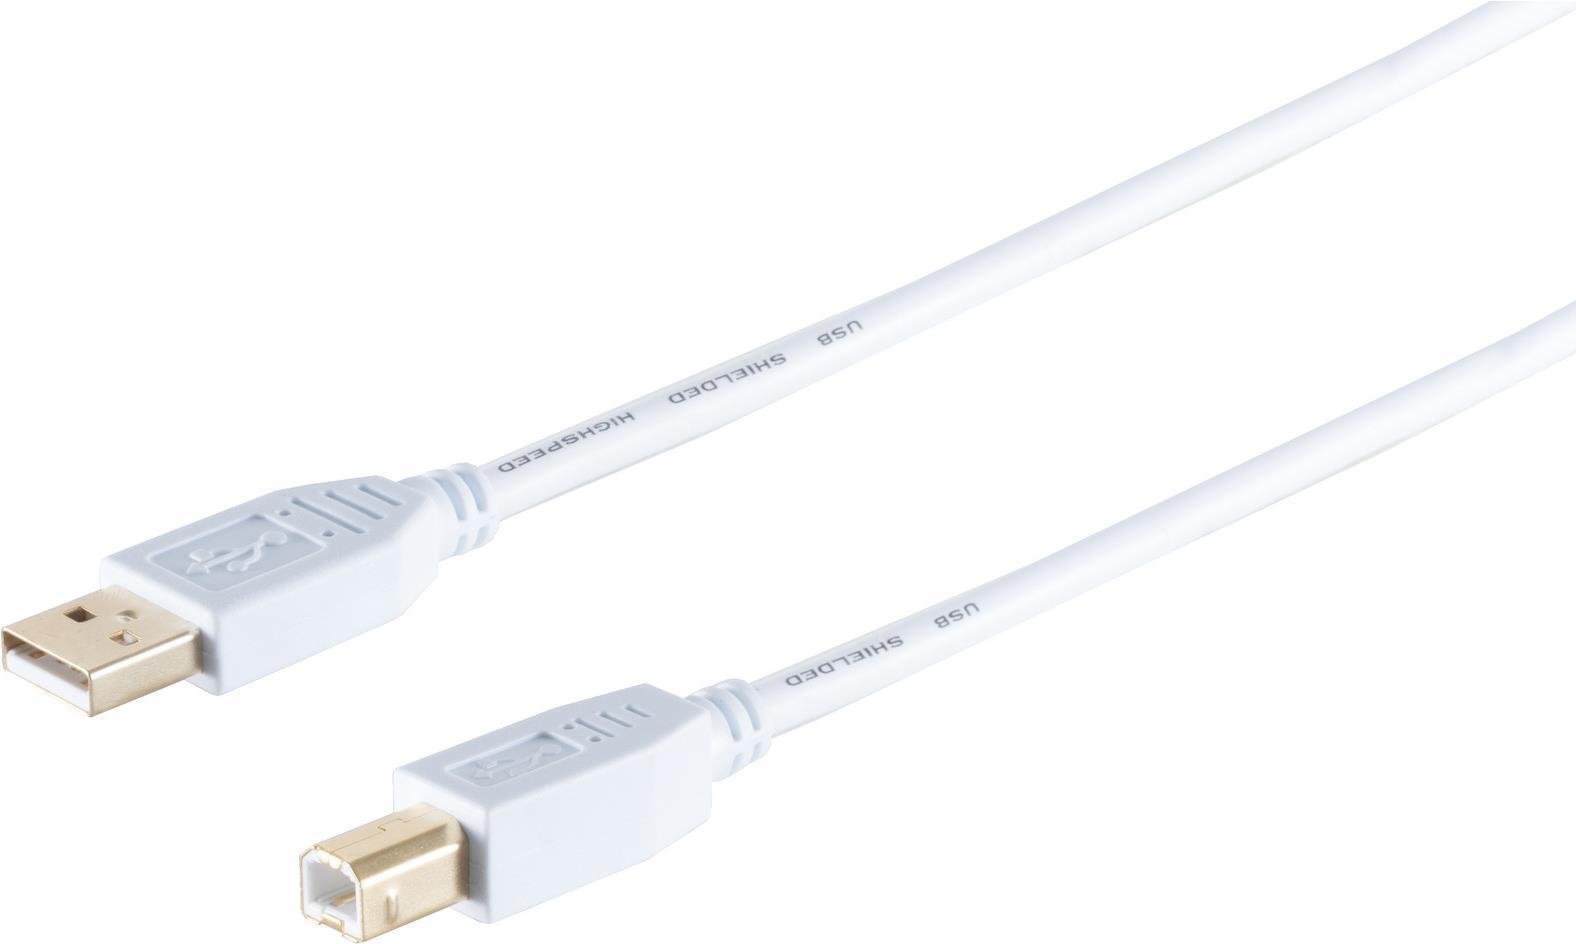 S/CONN maximum connectivity USB High Speed 2.0 Kabel, A/B Stecker, vergoldete Kontakte, USB 2.0, weiß, 5,0m (77025-W)